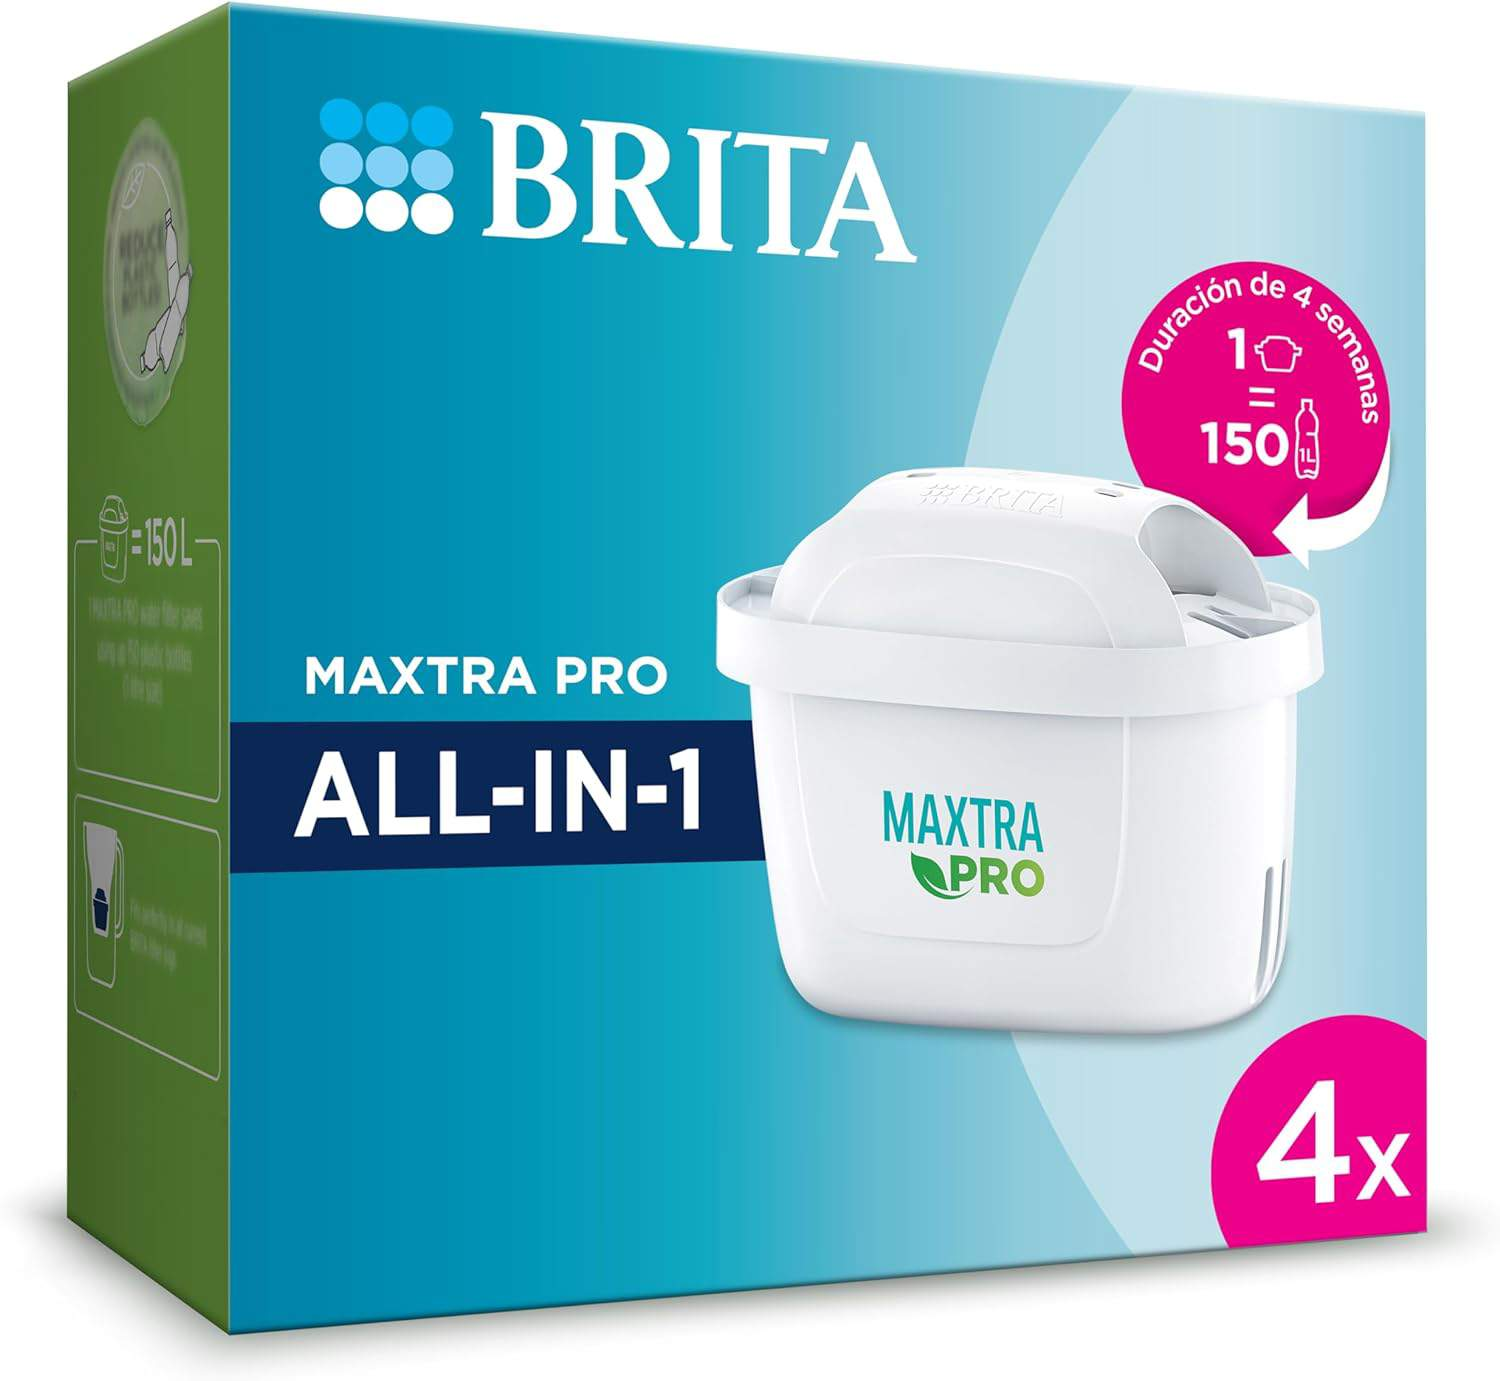 BRITA Cartucho de filtro de agua MAXTRA PRO All-in-1 pack 4